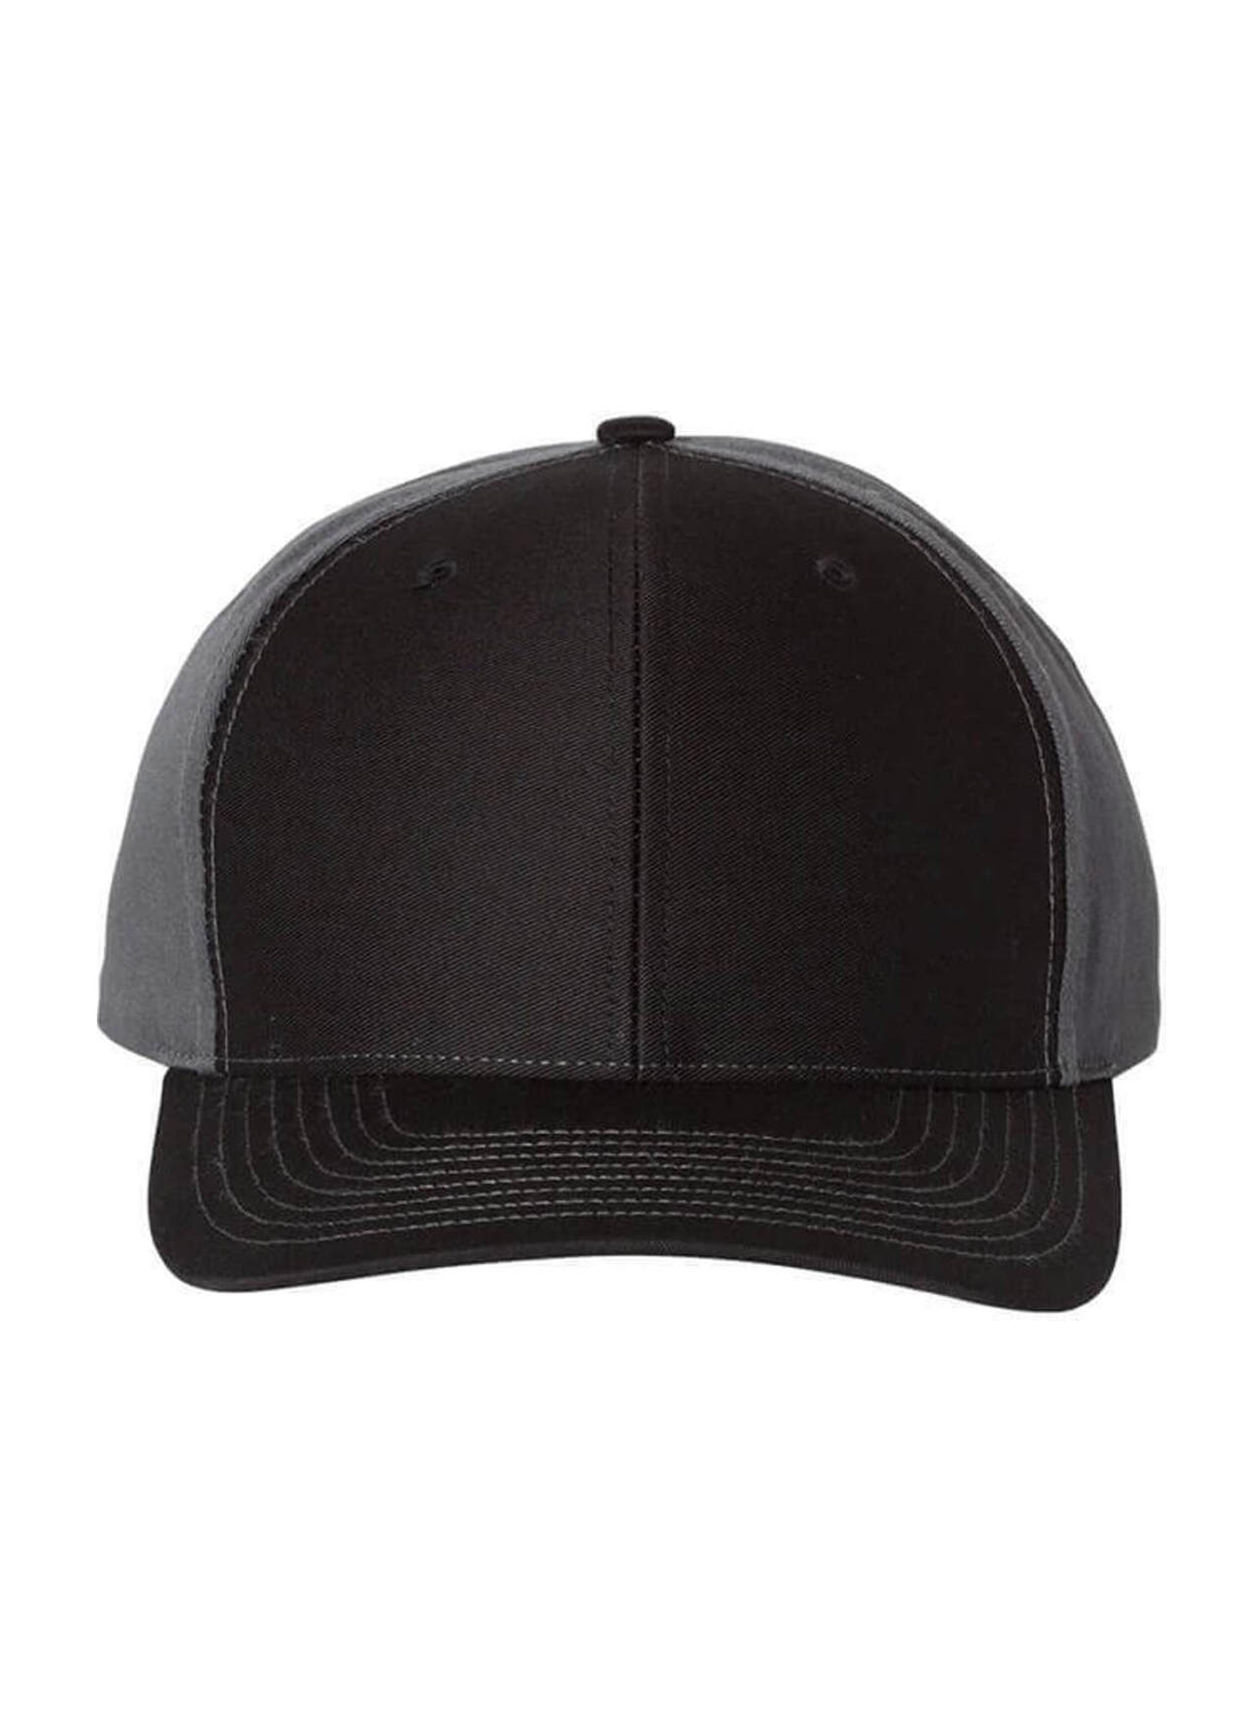 Richardson Black / Charcoal Richarson Twill Back Trucker Hat